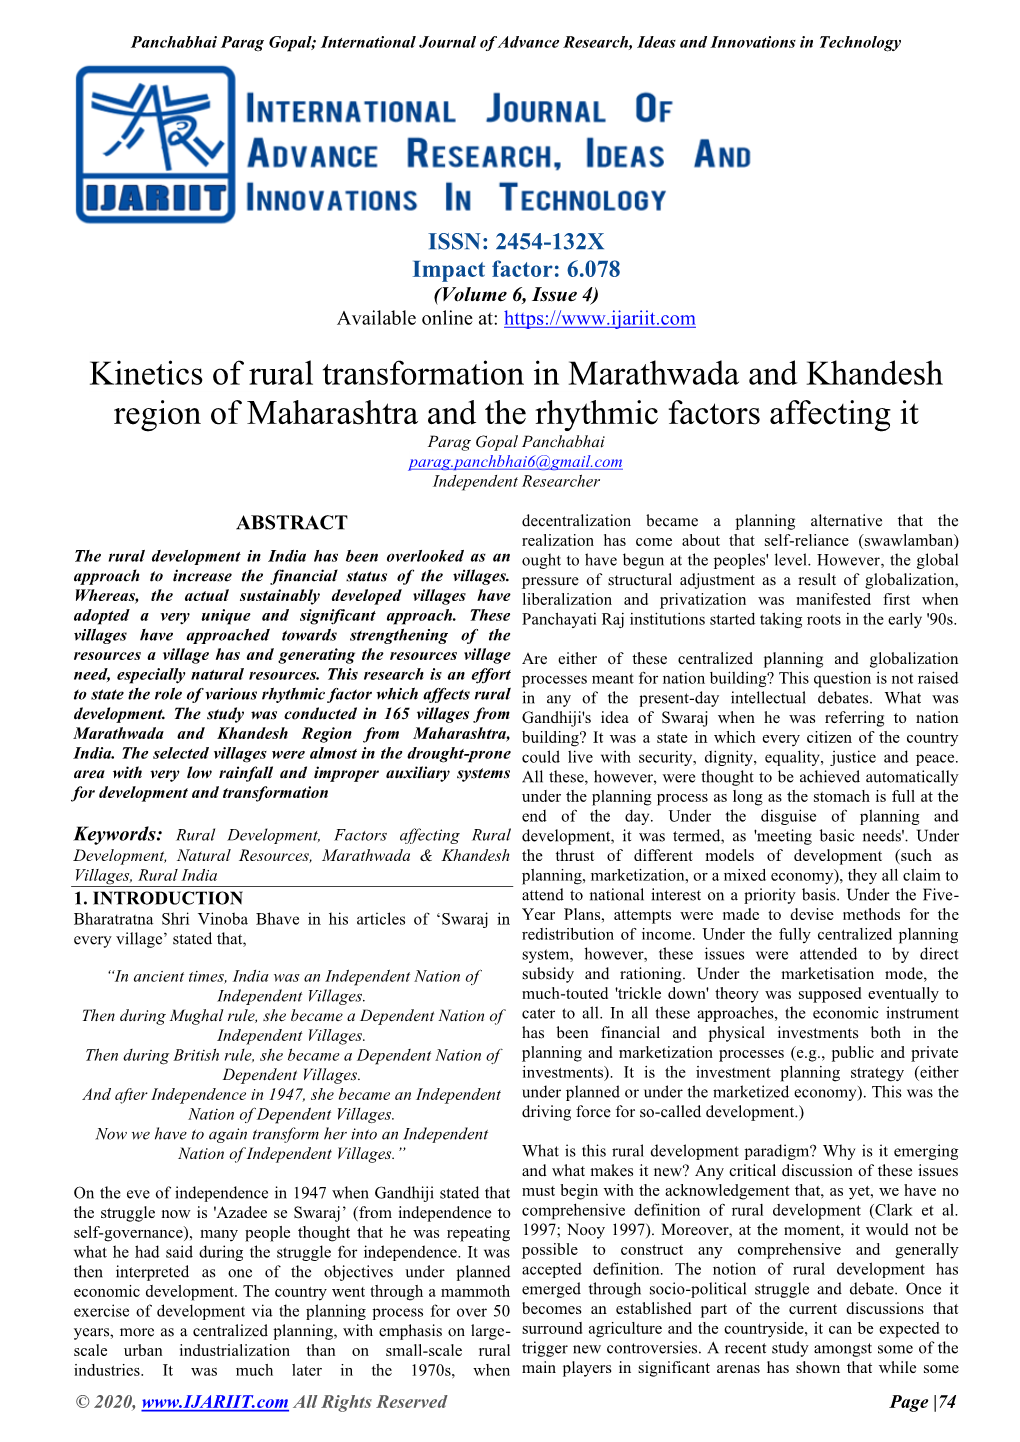 Kinetics of Rural Transformation in Marathwada & Khandesh Region Of